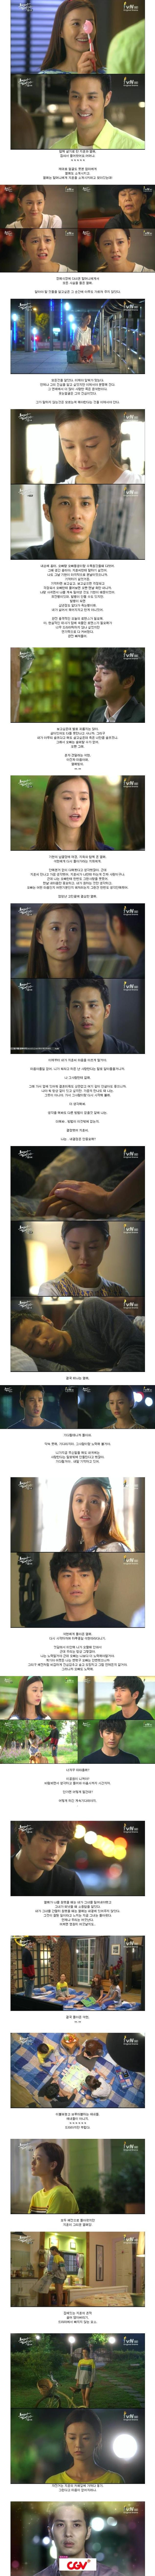 episode 14 captures for the Korean drama 'I Need Romance 2012'